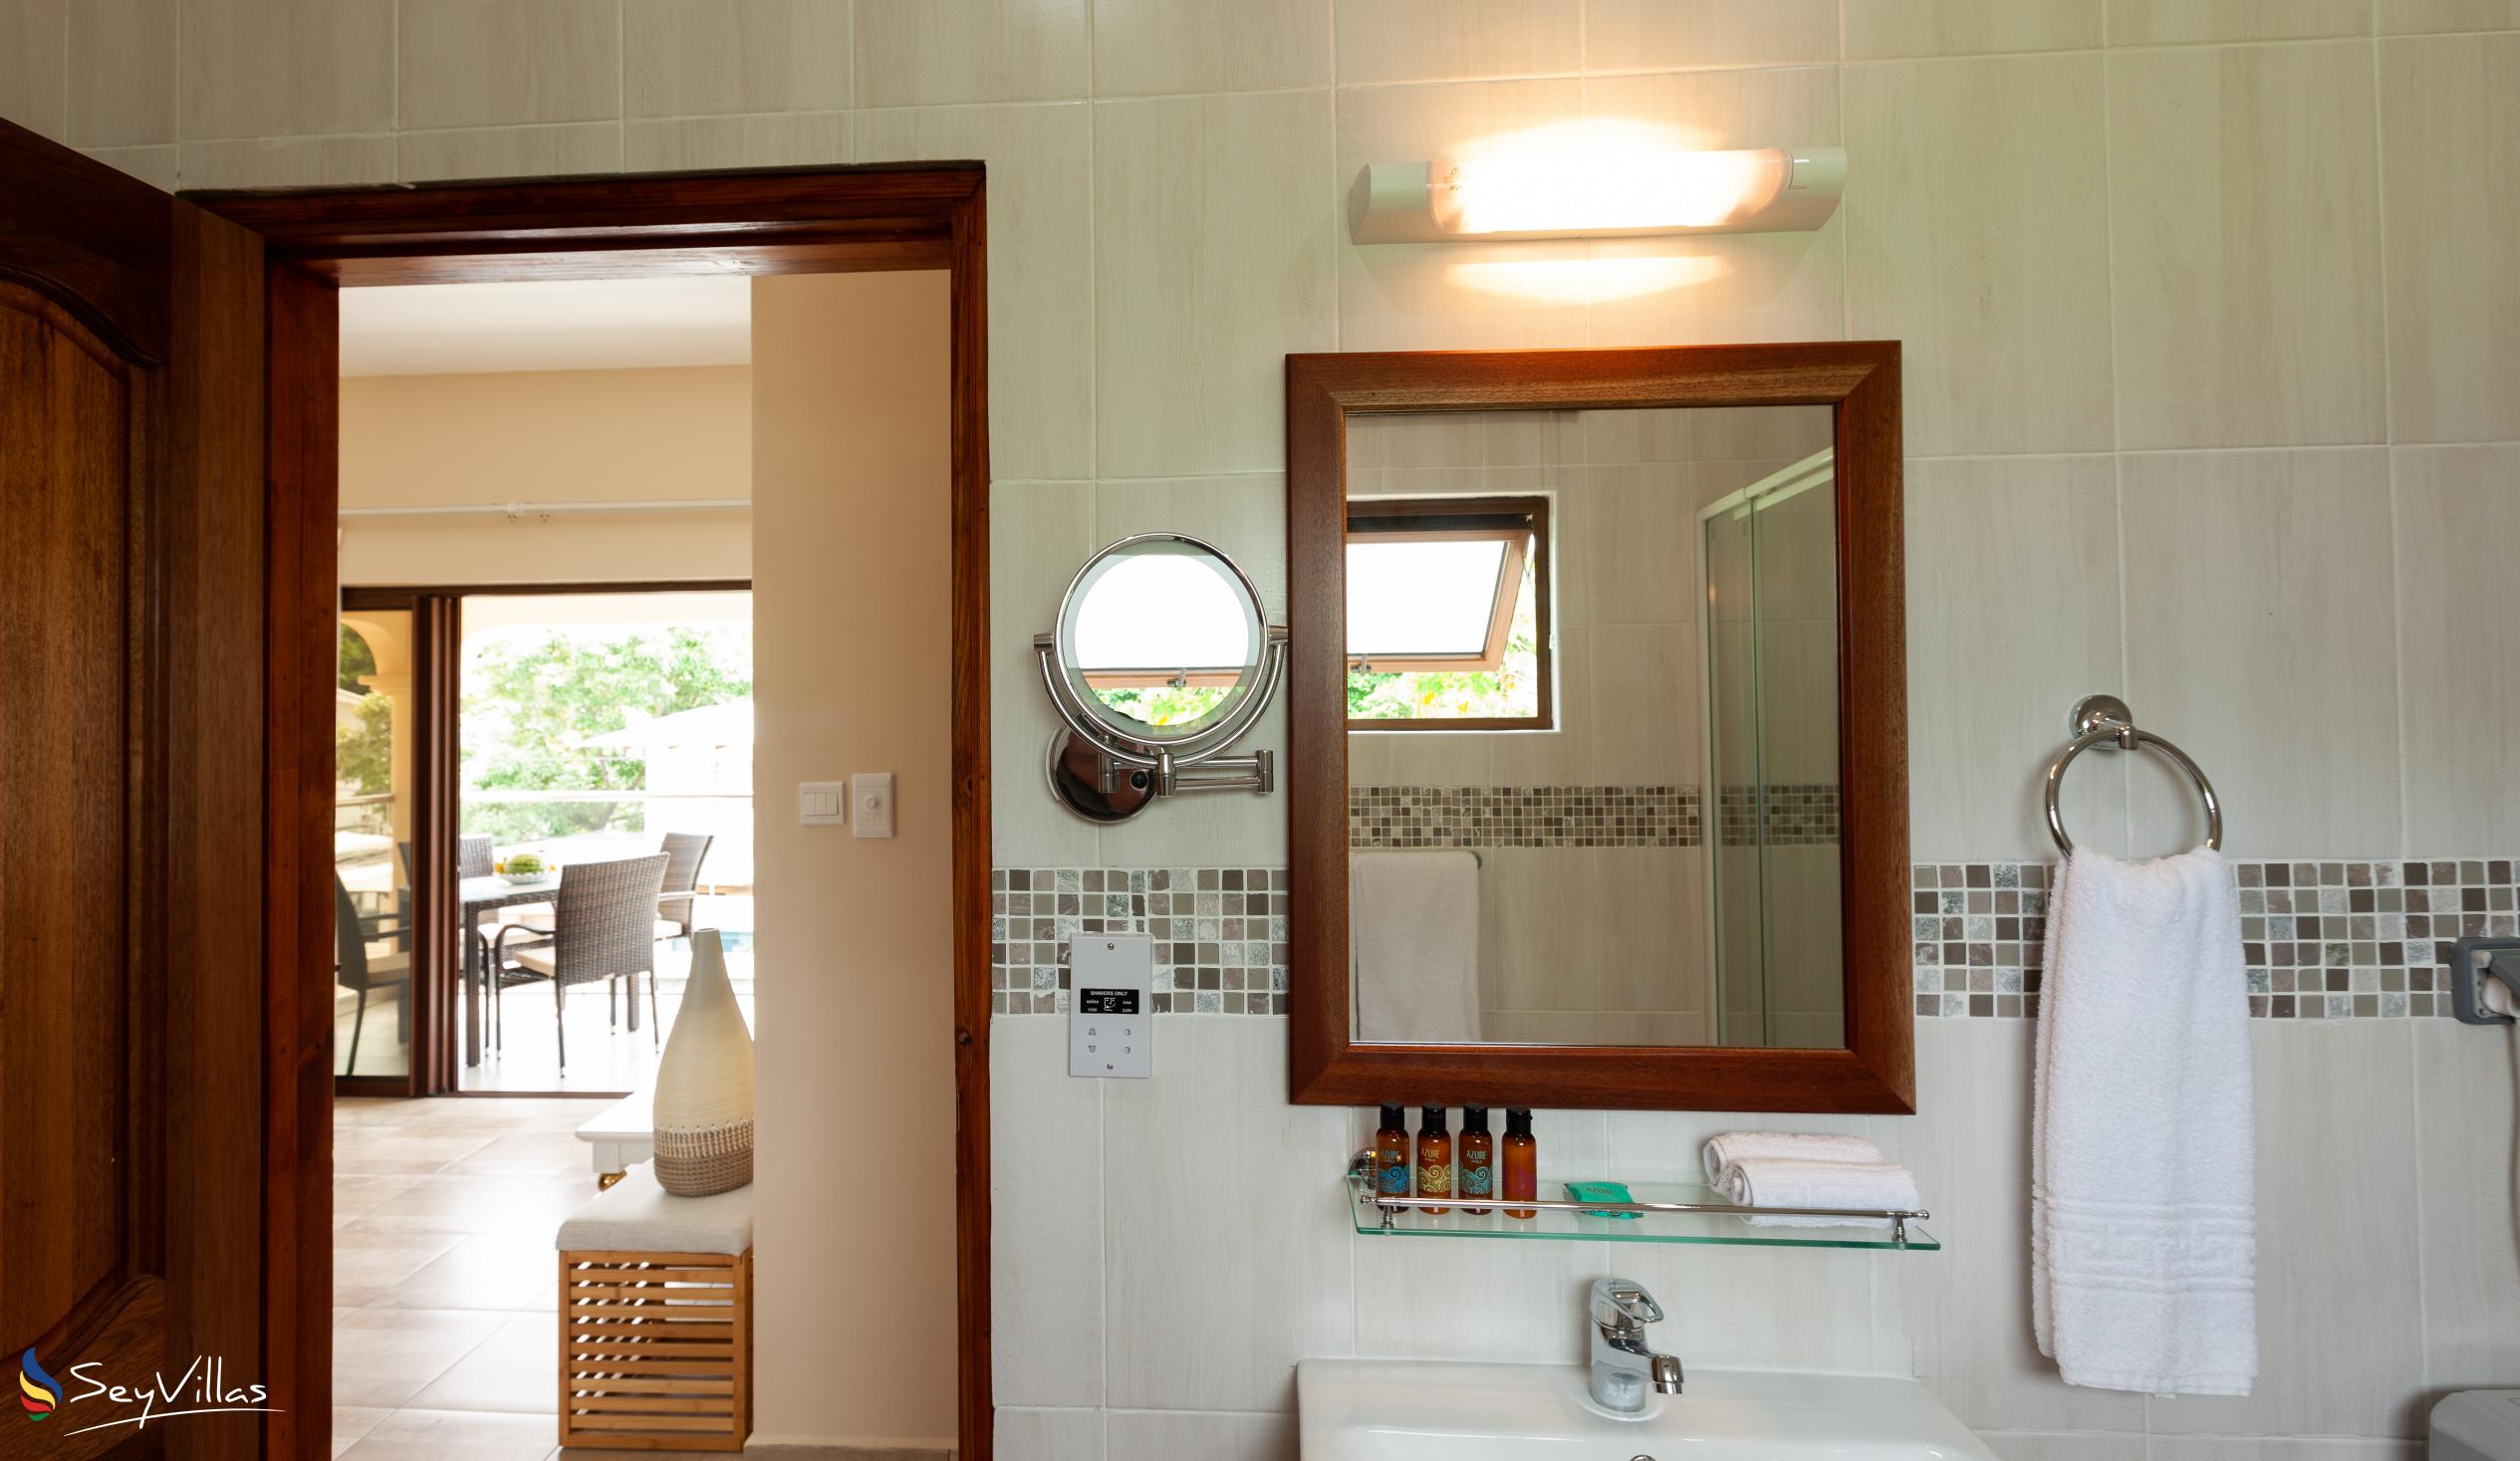 Photo 36: Stone Self Catering Apartments - 1-Bedroom Apartment - Praslin (Seychelles)